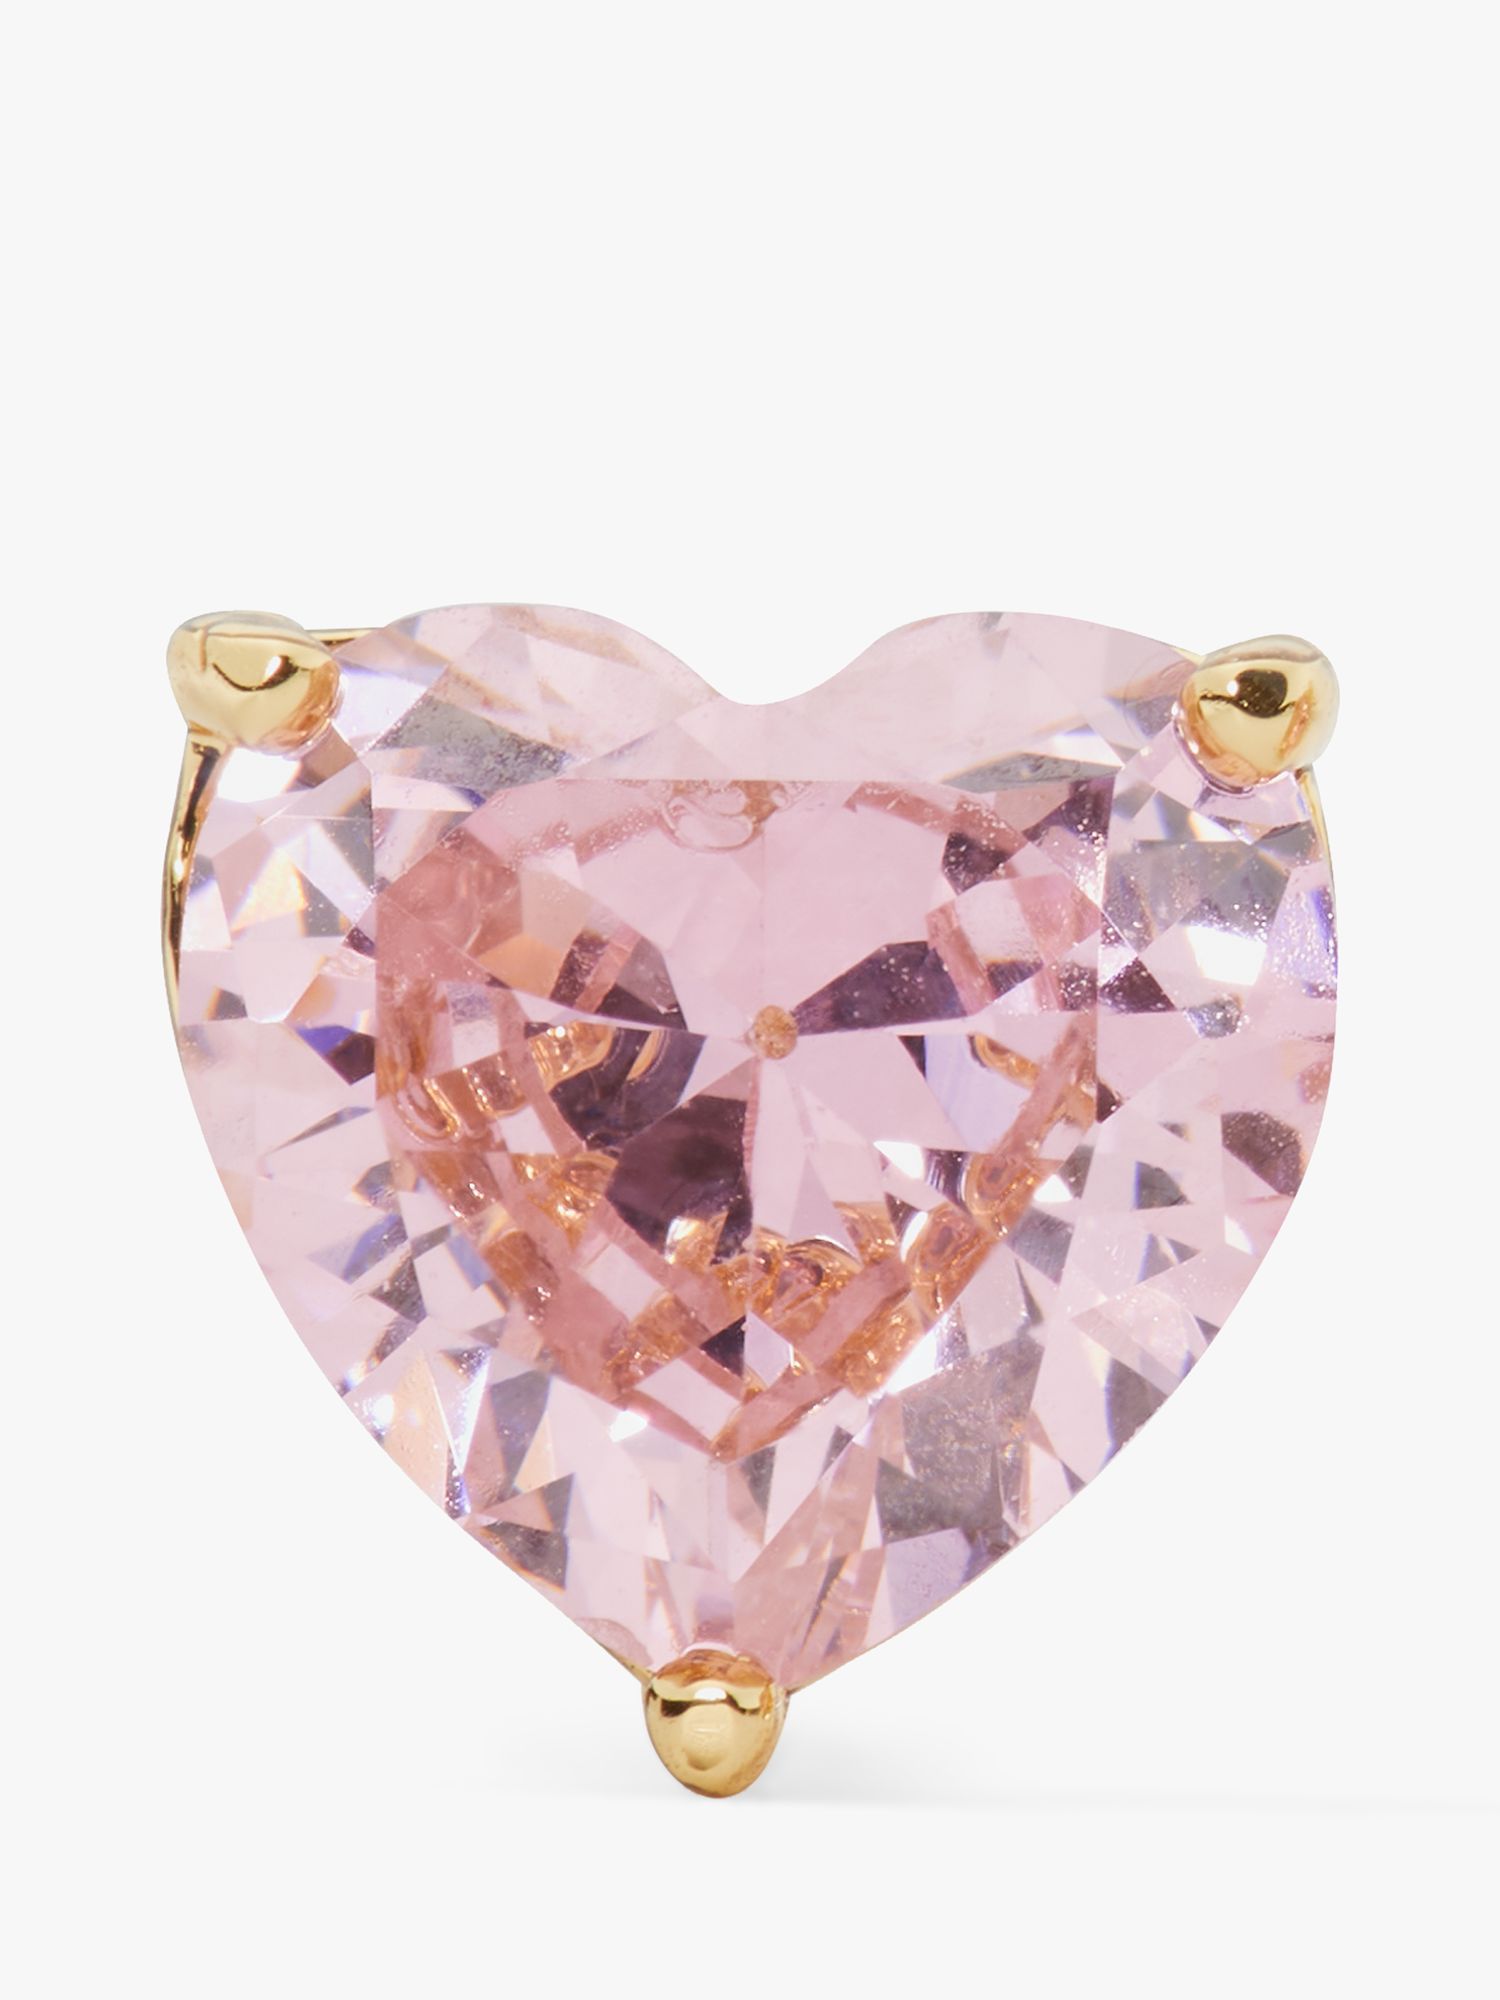 kate spade new york Cubic Zirconia Heart Stud Earrings, Gold/Pink